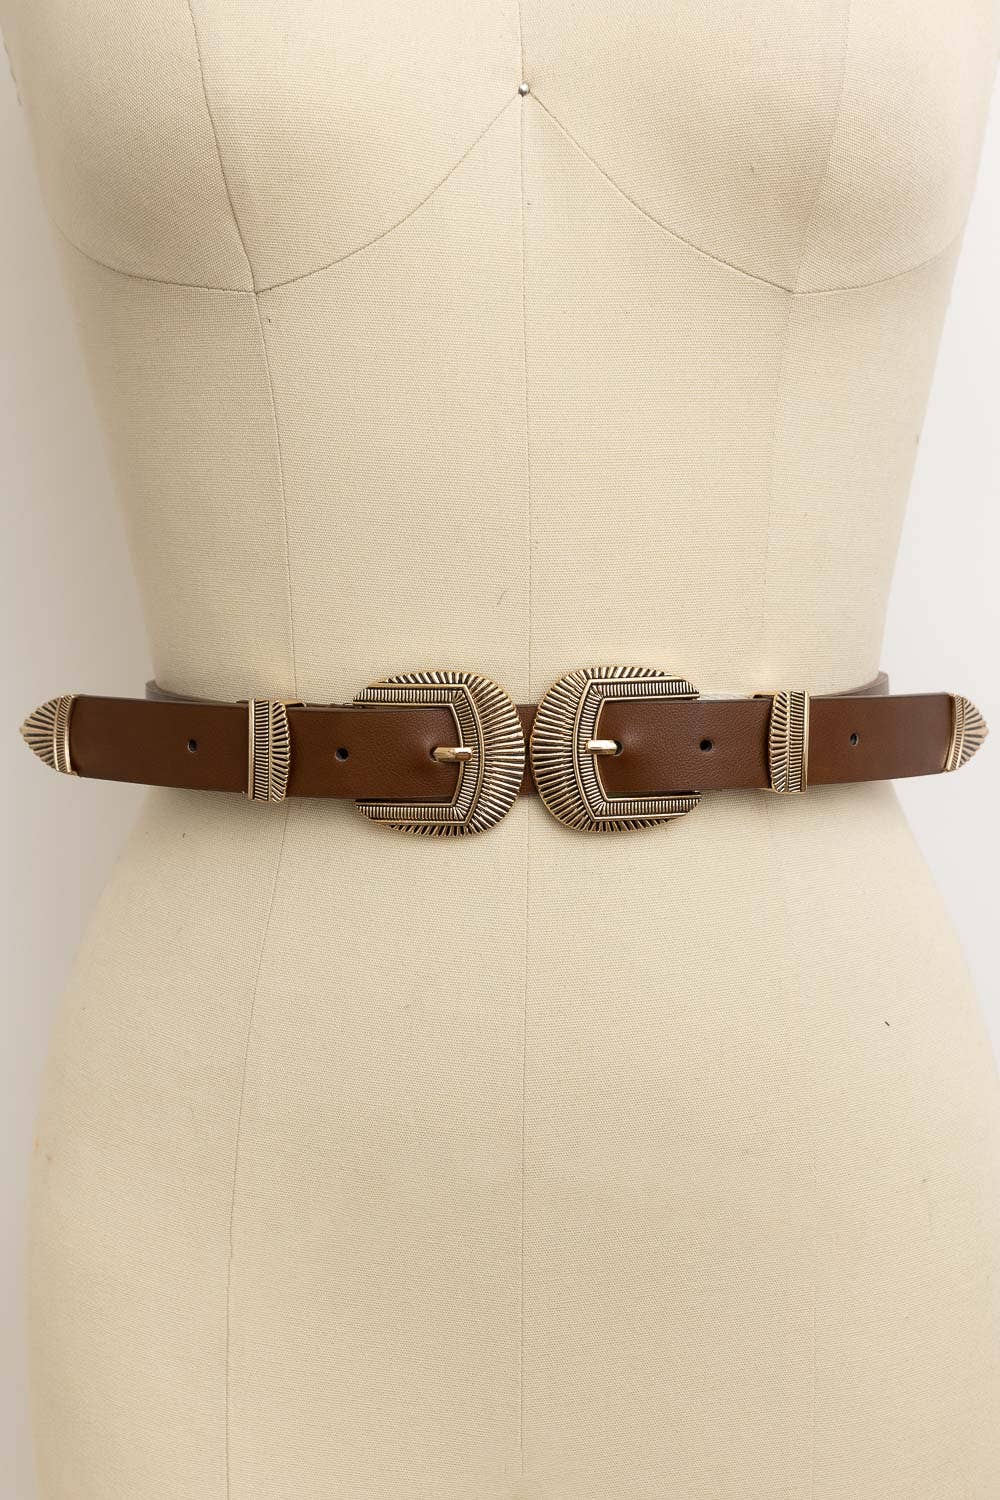 Double Buckle Faux Leather Western Style Belt